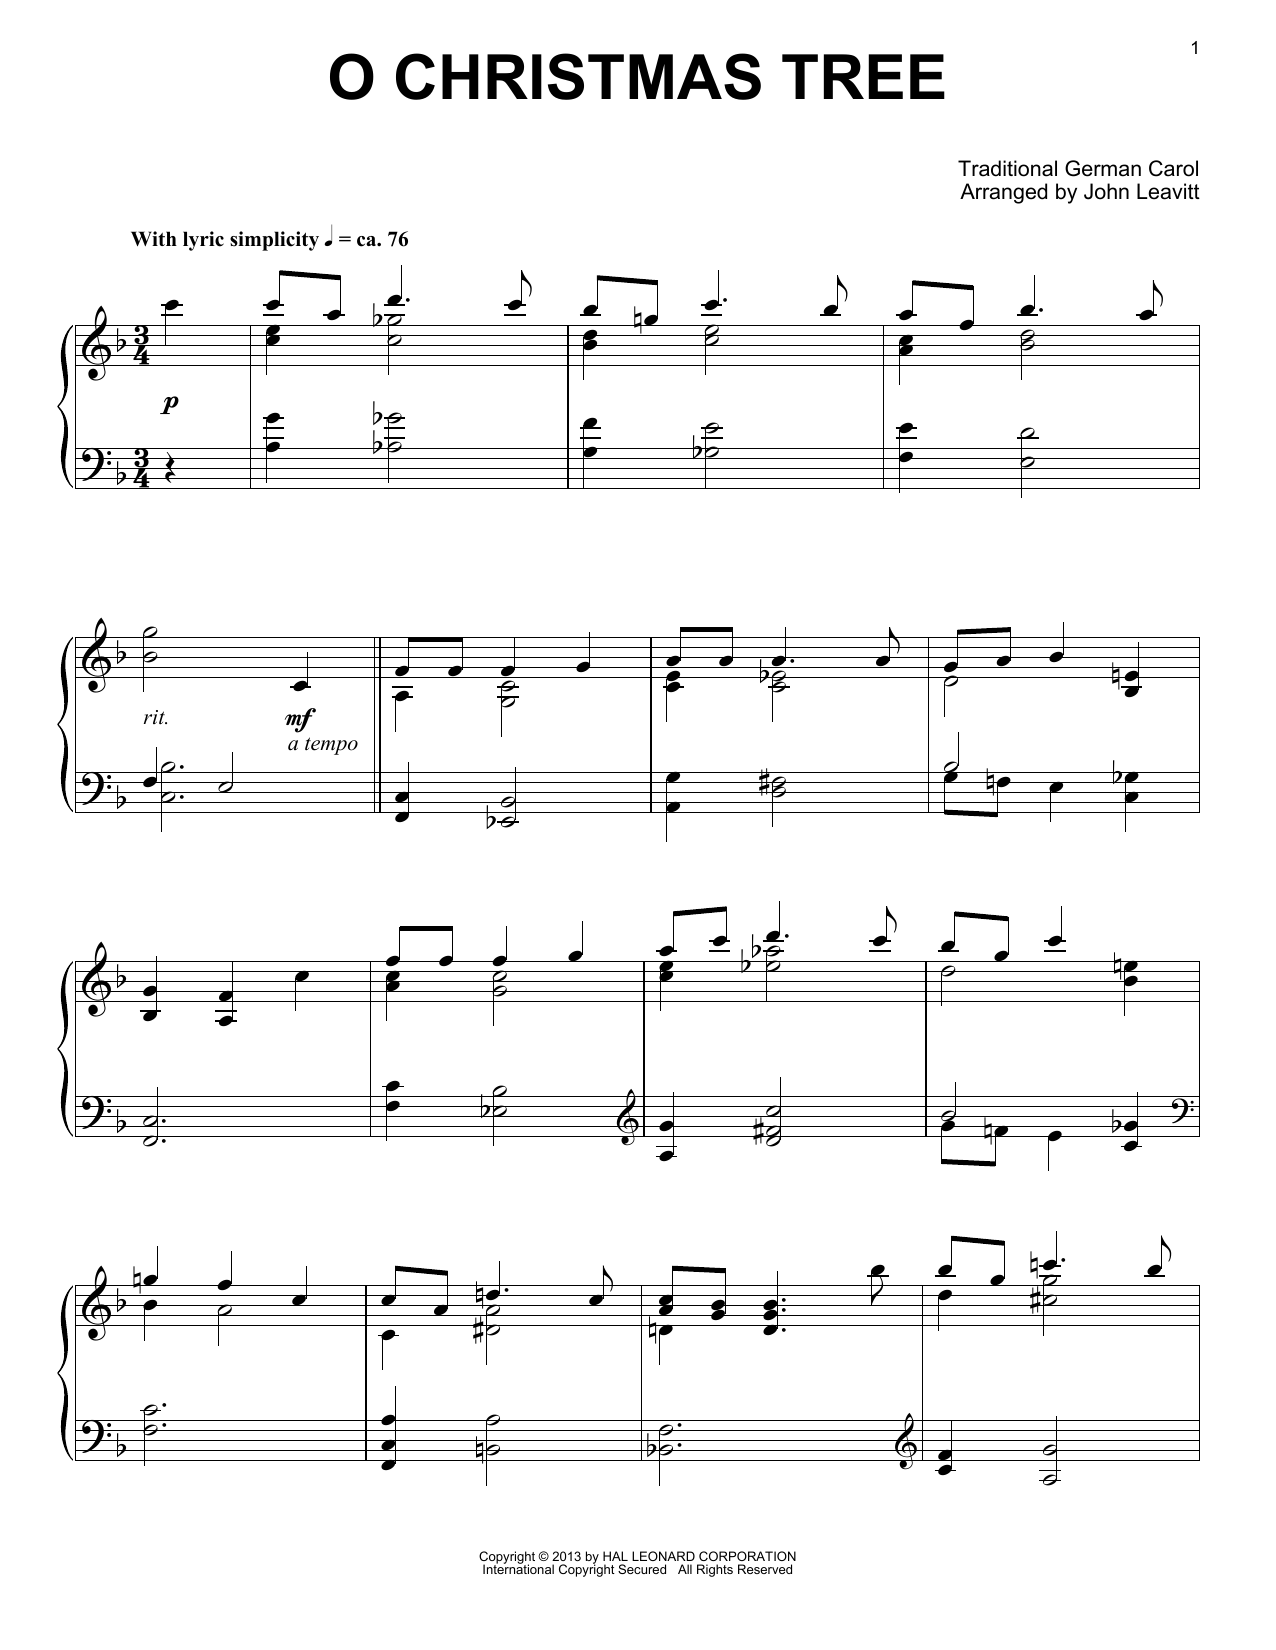 Traditional German Carol O Christmas Tree sheet music notes and chords arranged for ChordBuddy